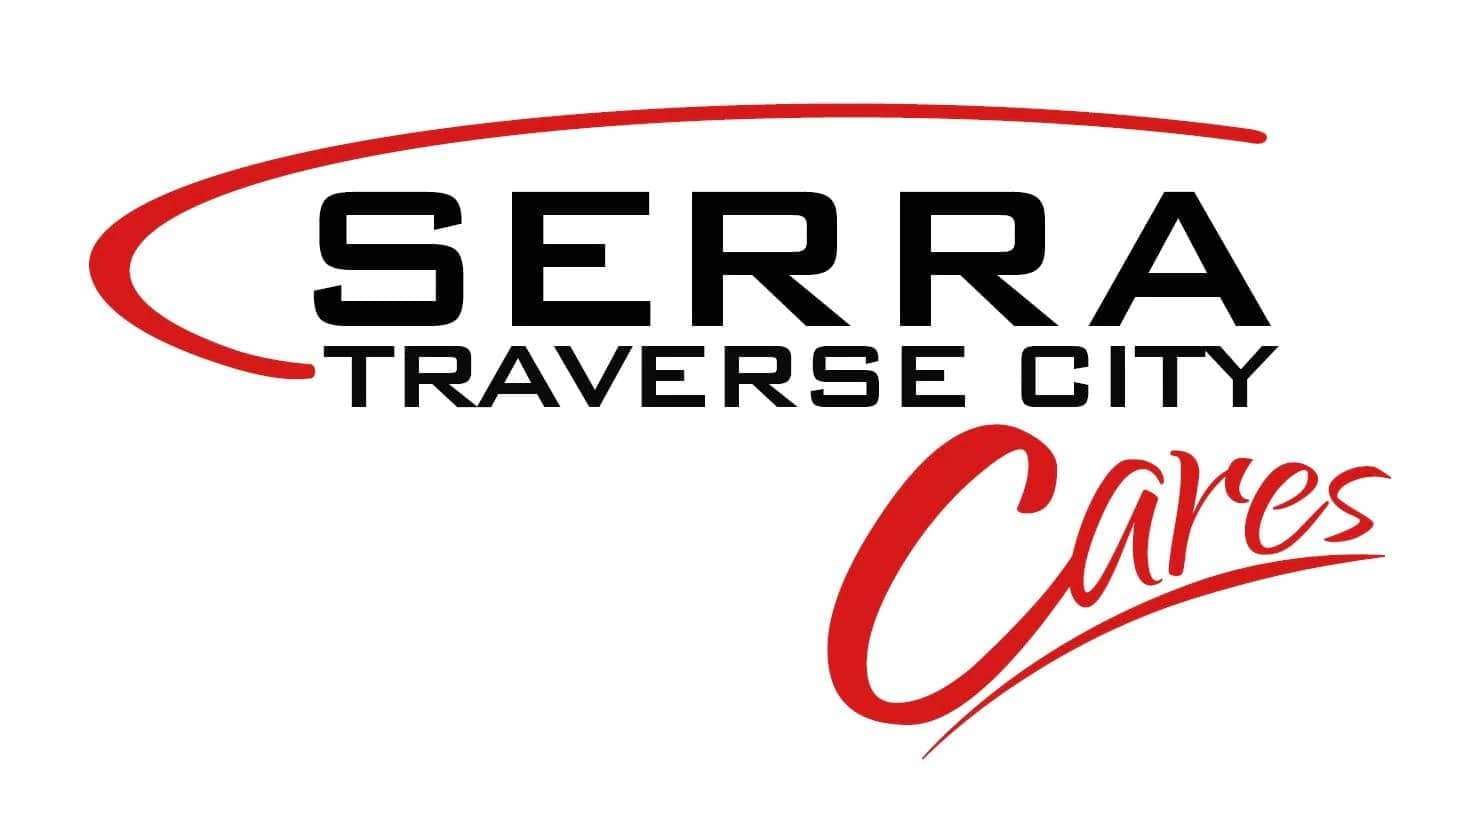 Serra Subaru Traverse City Cares